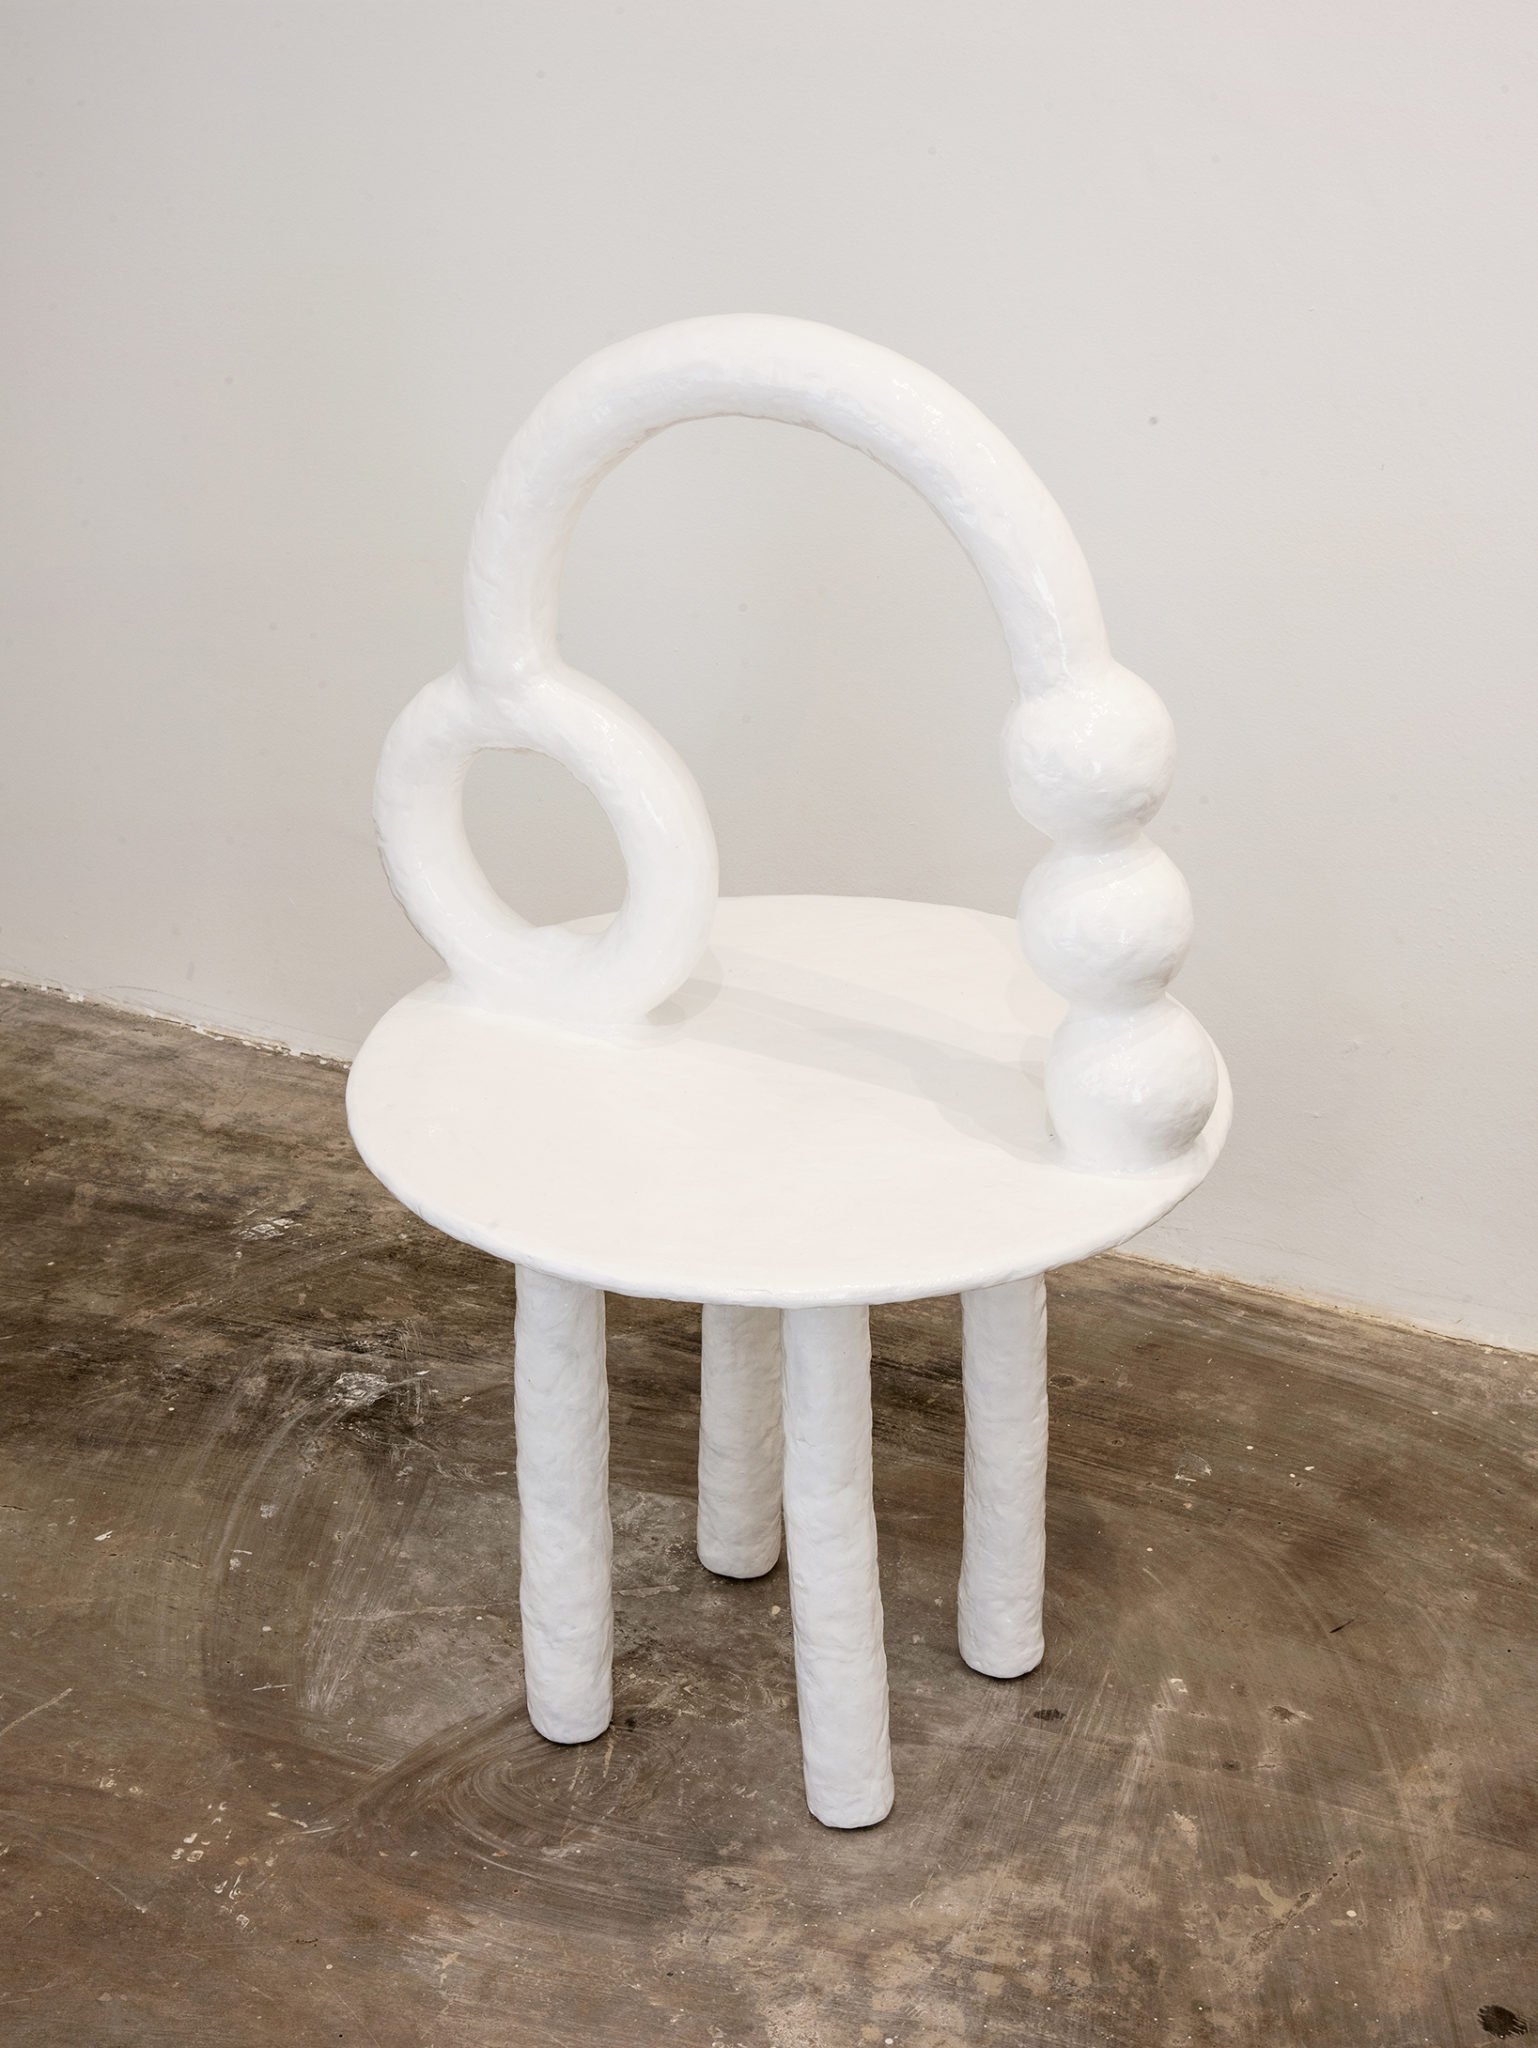 An organic white design chair designed by Brazilian artist Camilla D'Anunziata.